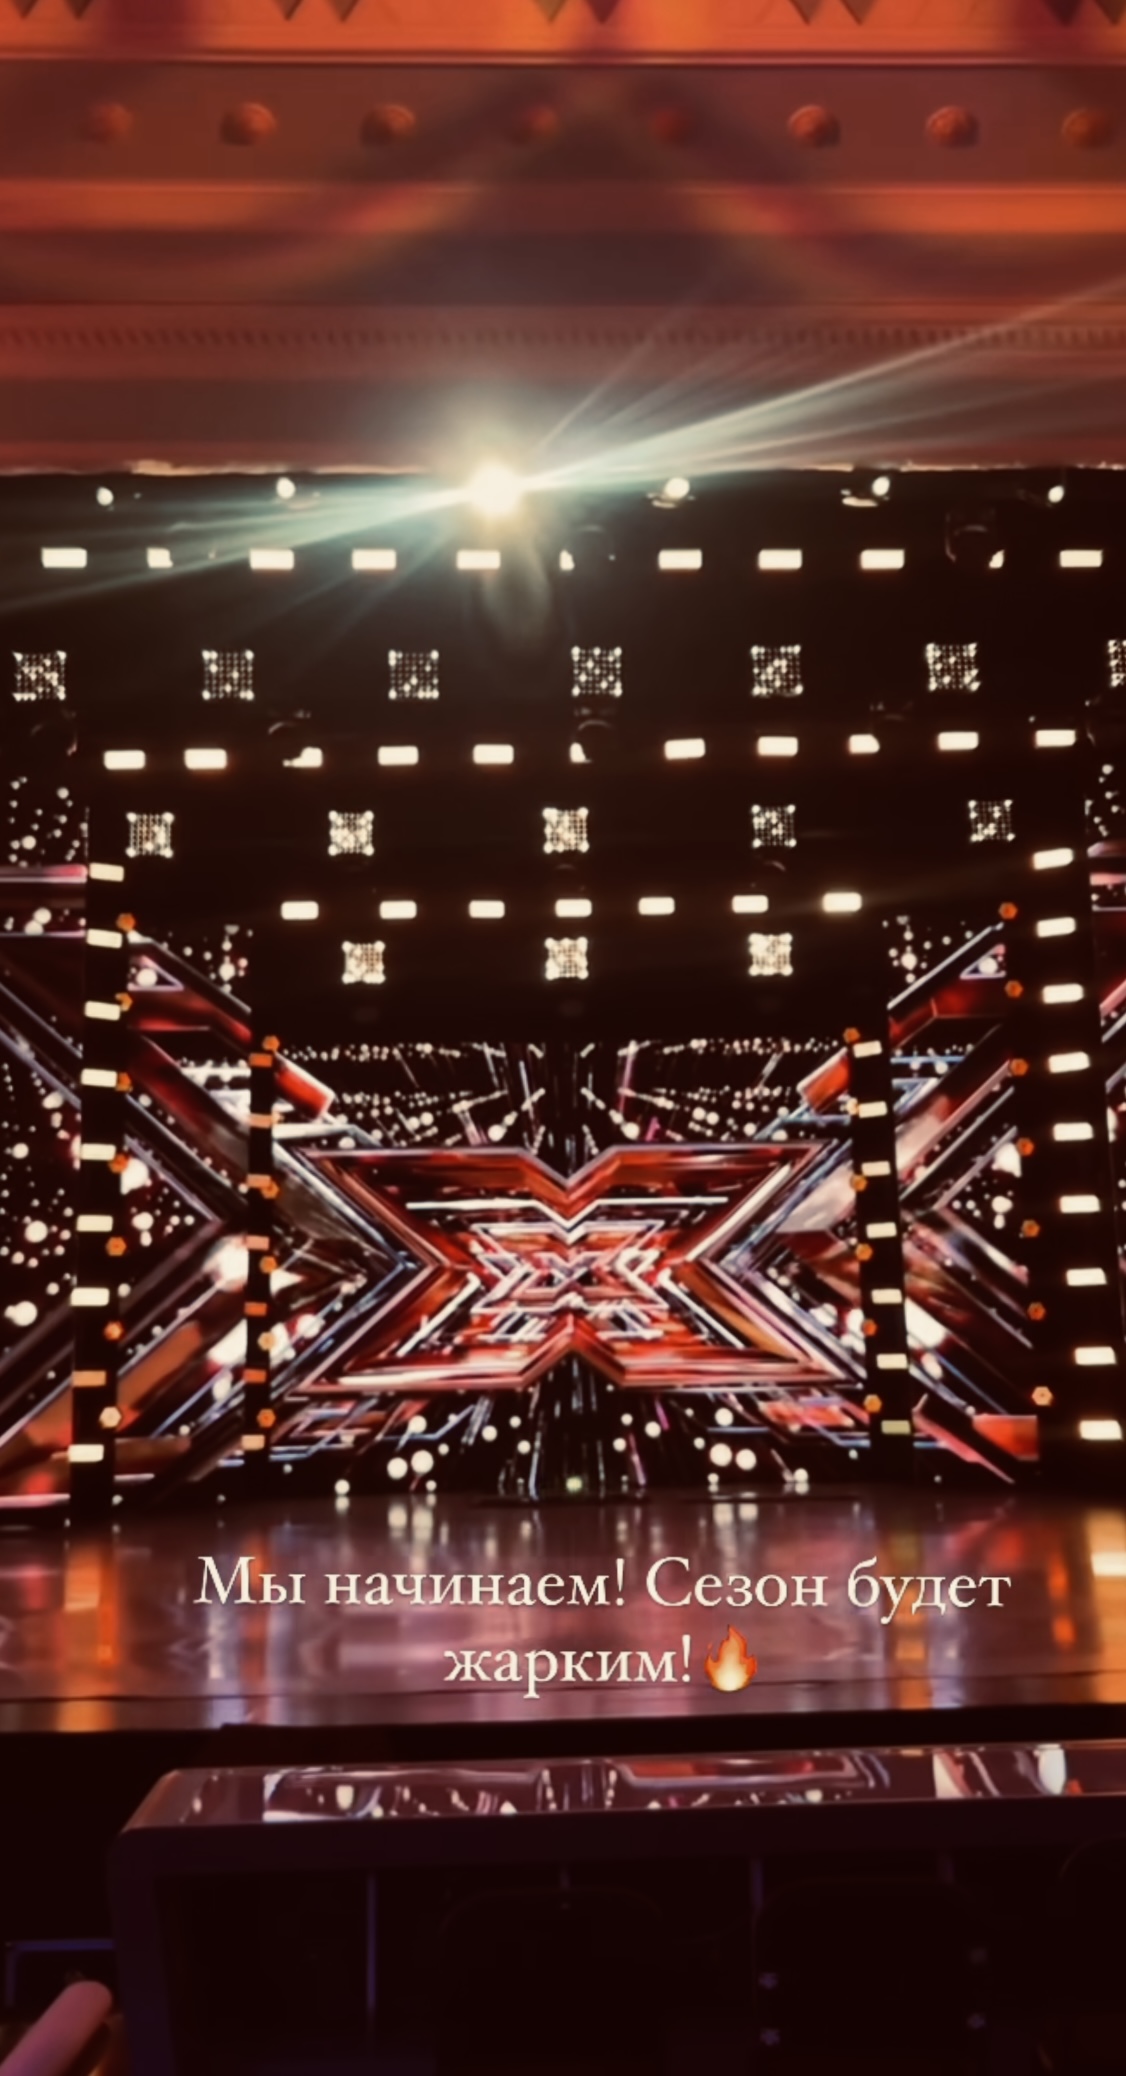 "The X Factor" has arrived in Uzbekistan